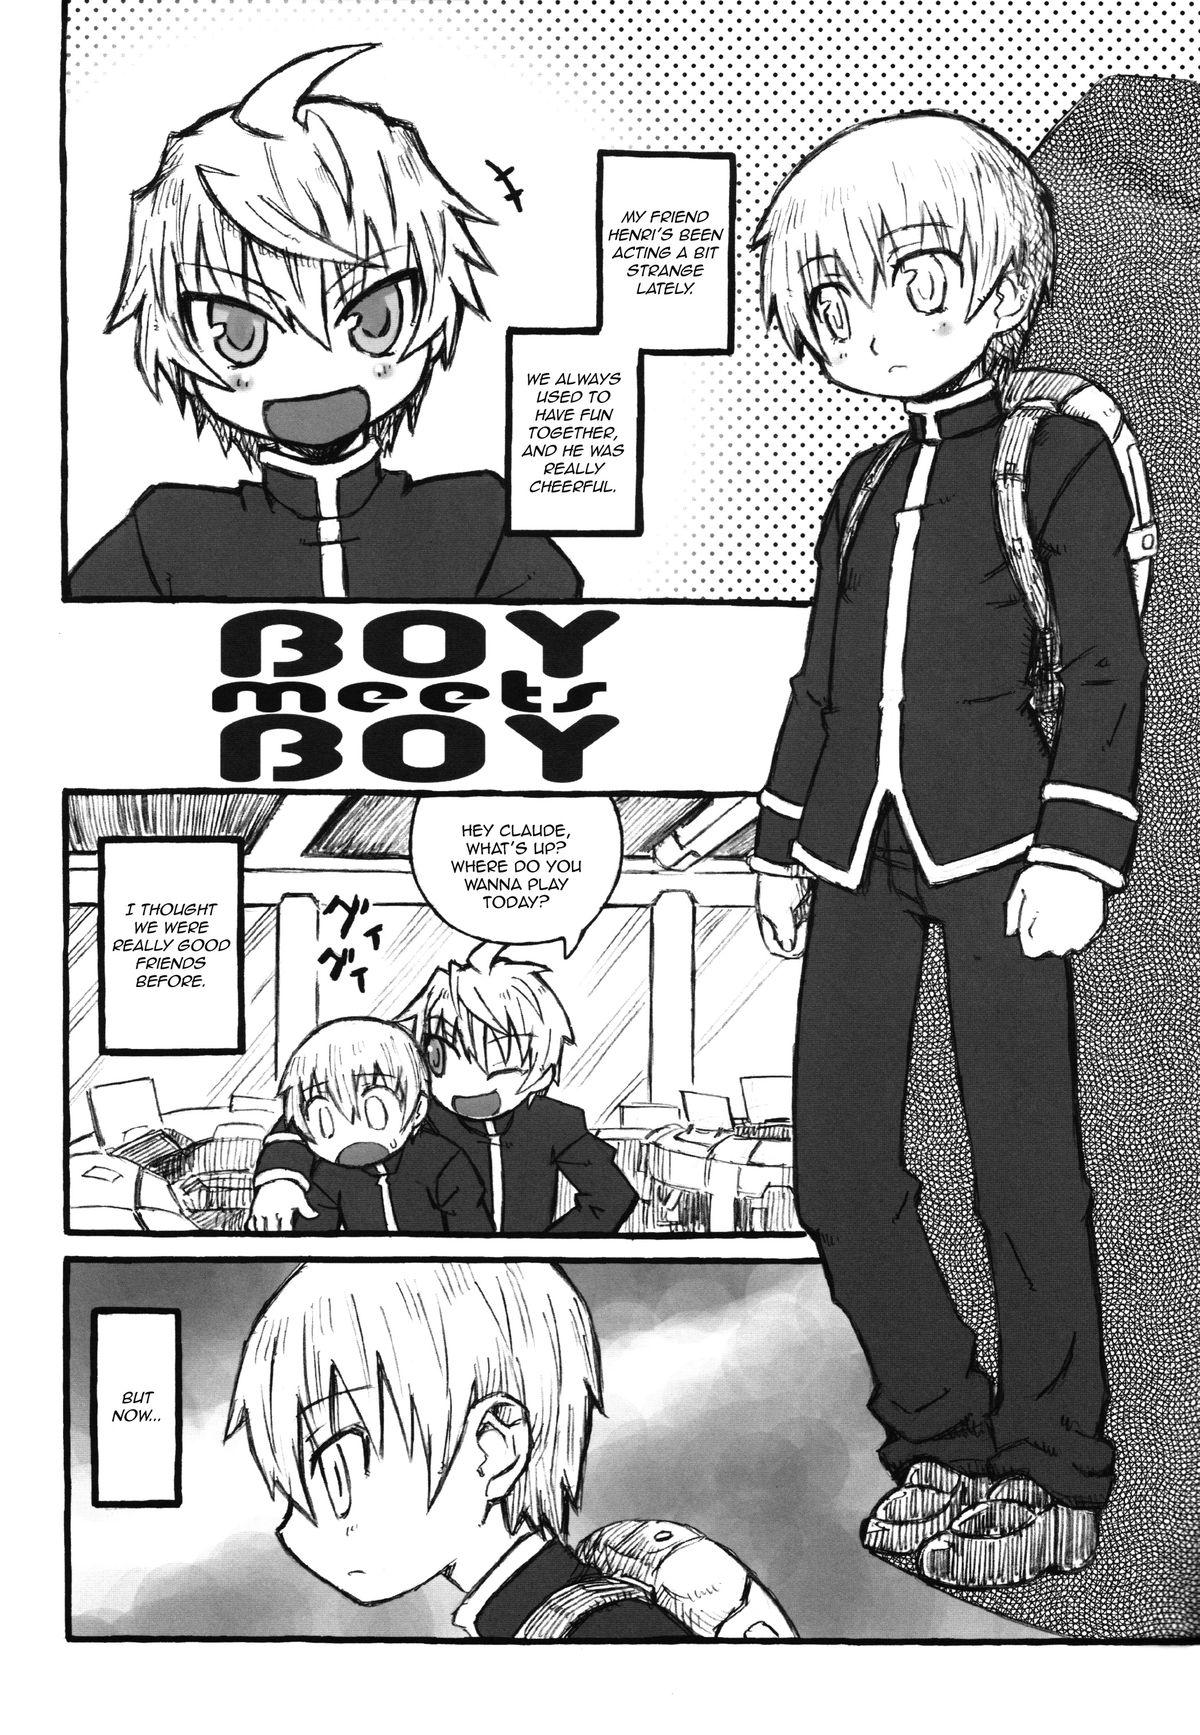 Gay Skinny BOY meets BOY Boss - Page 3